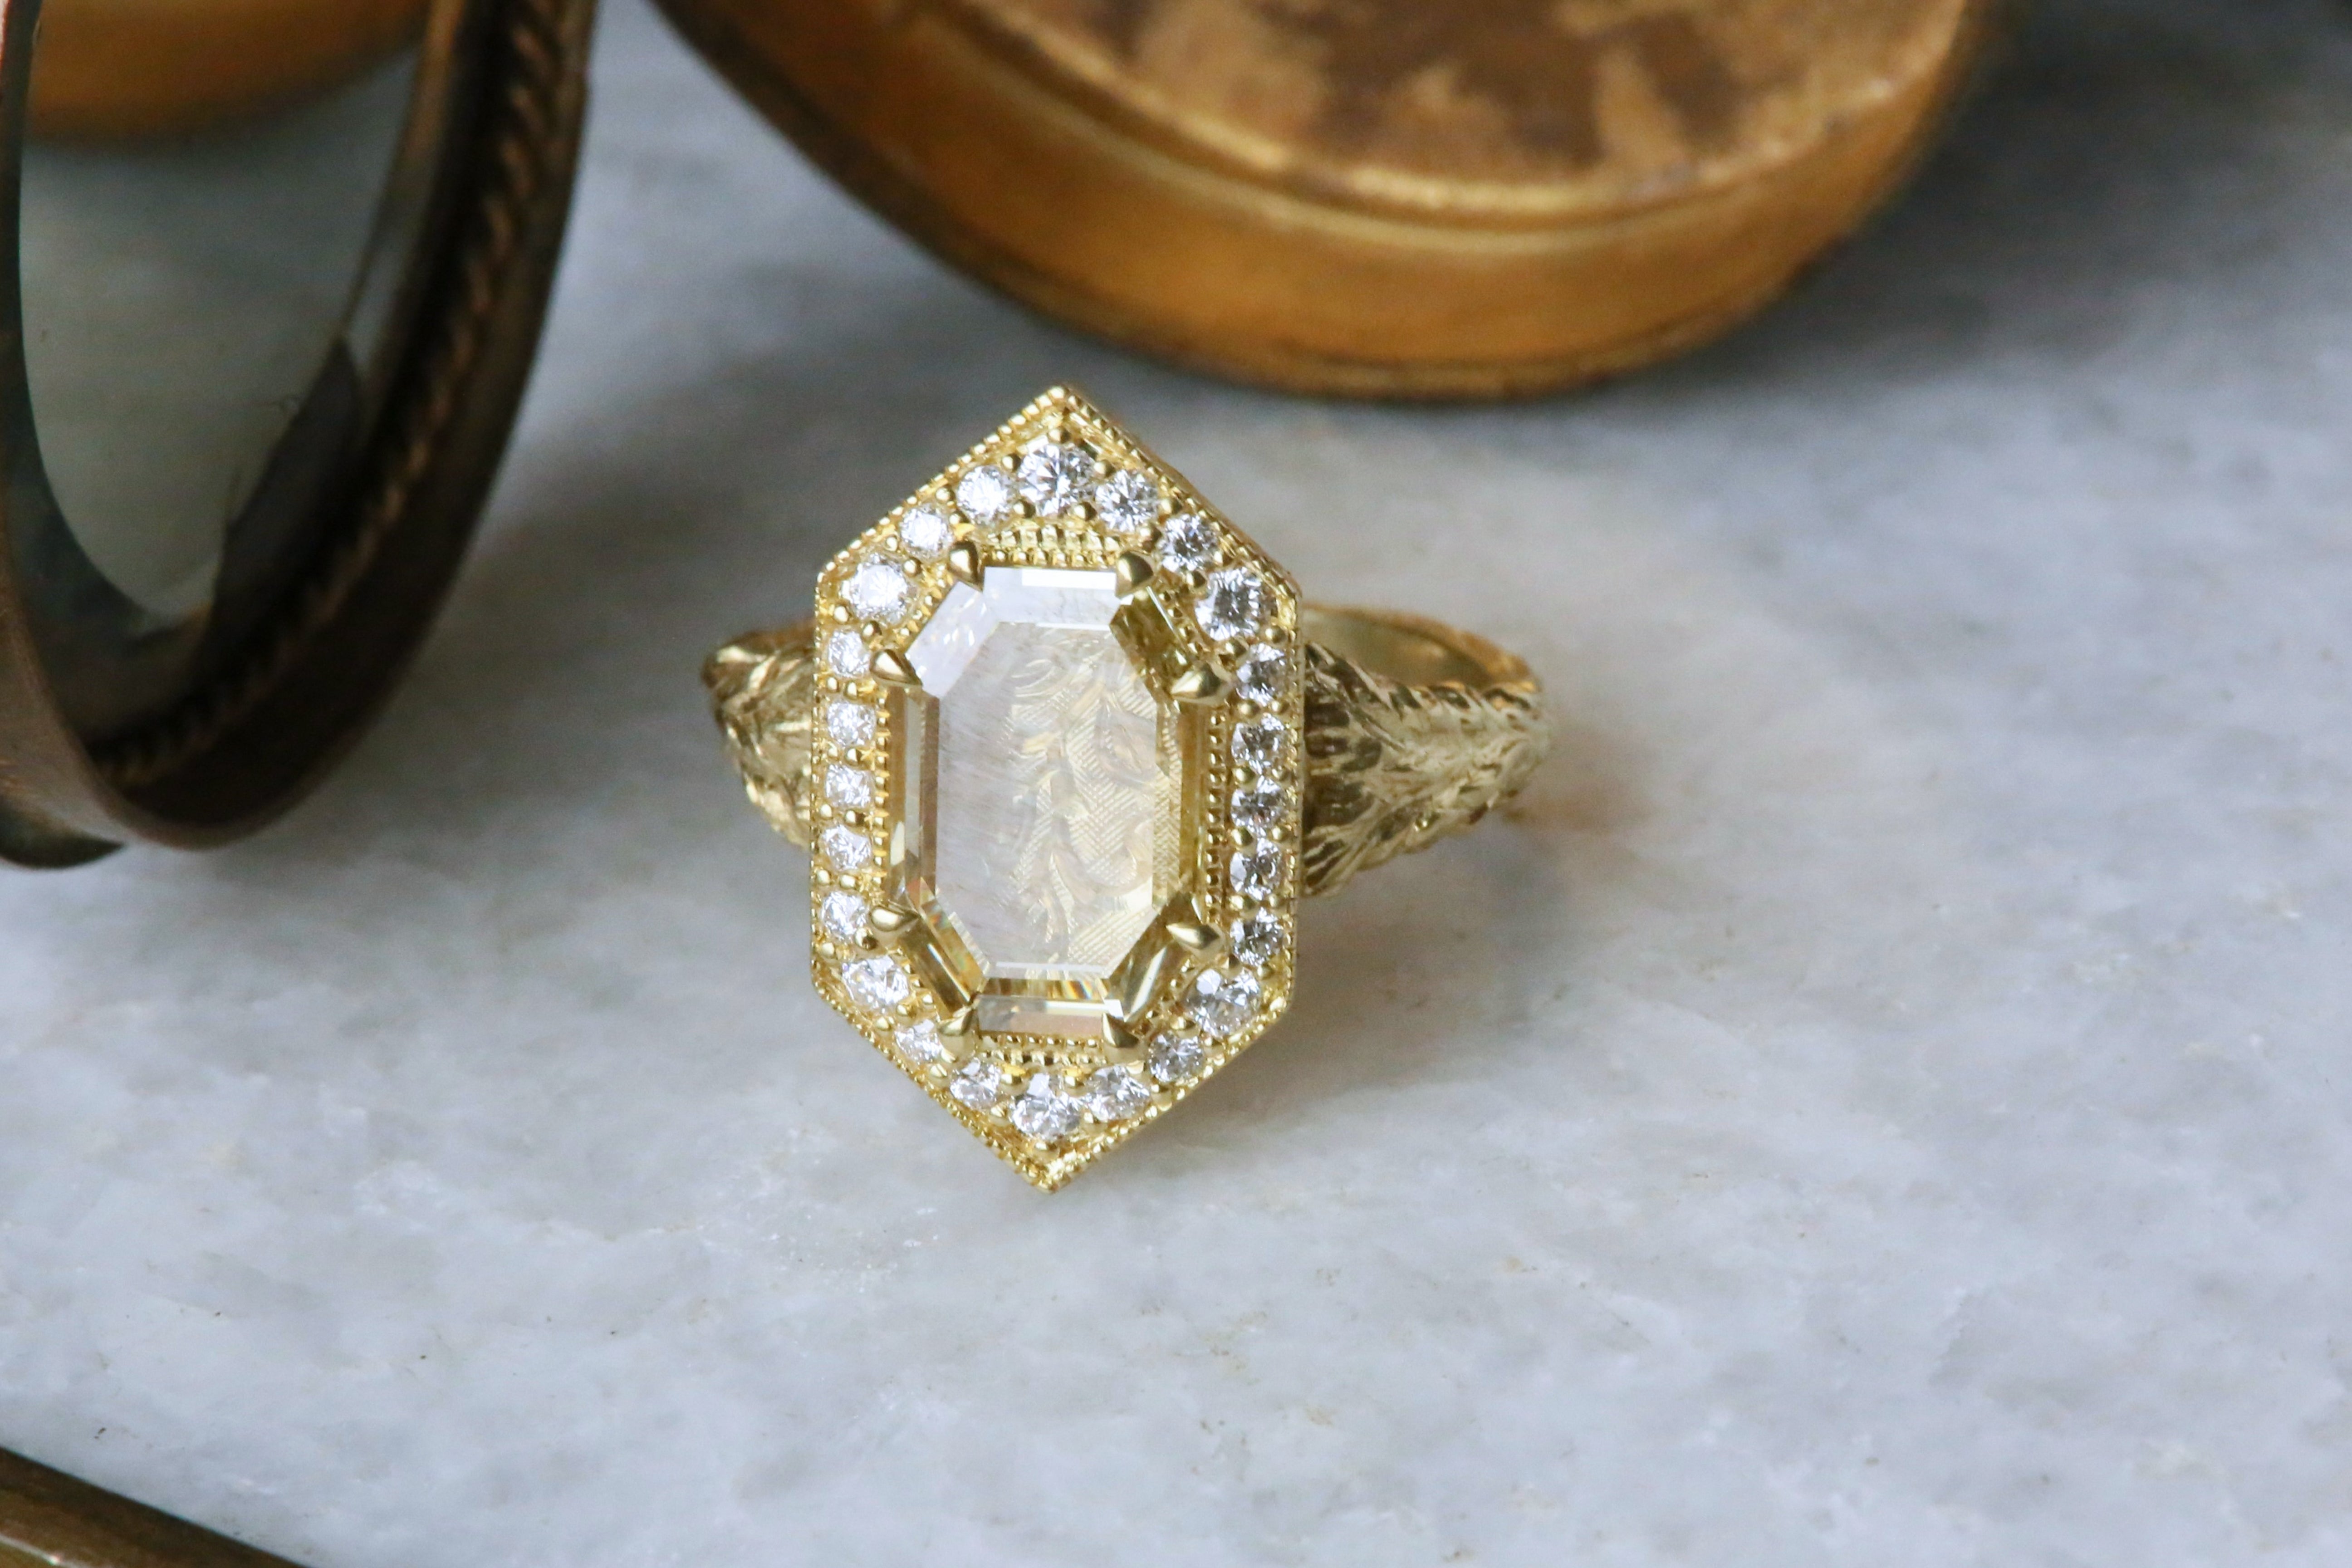 The Illuminated No. 1 Ring in Natural Portrait Cut Diamond